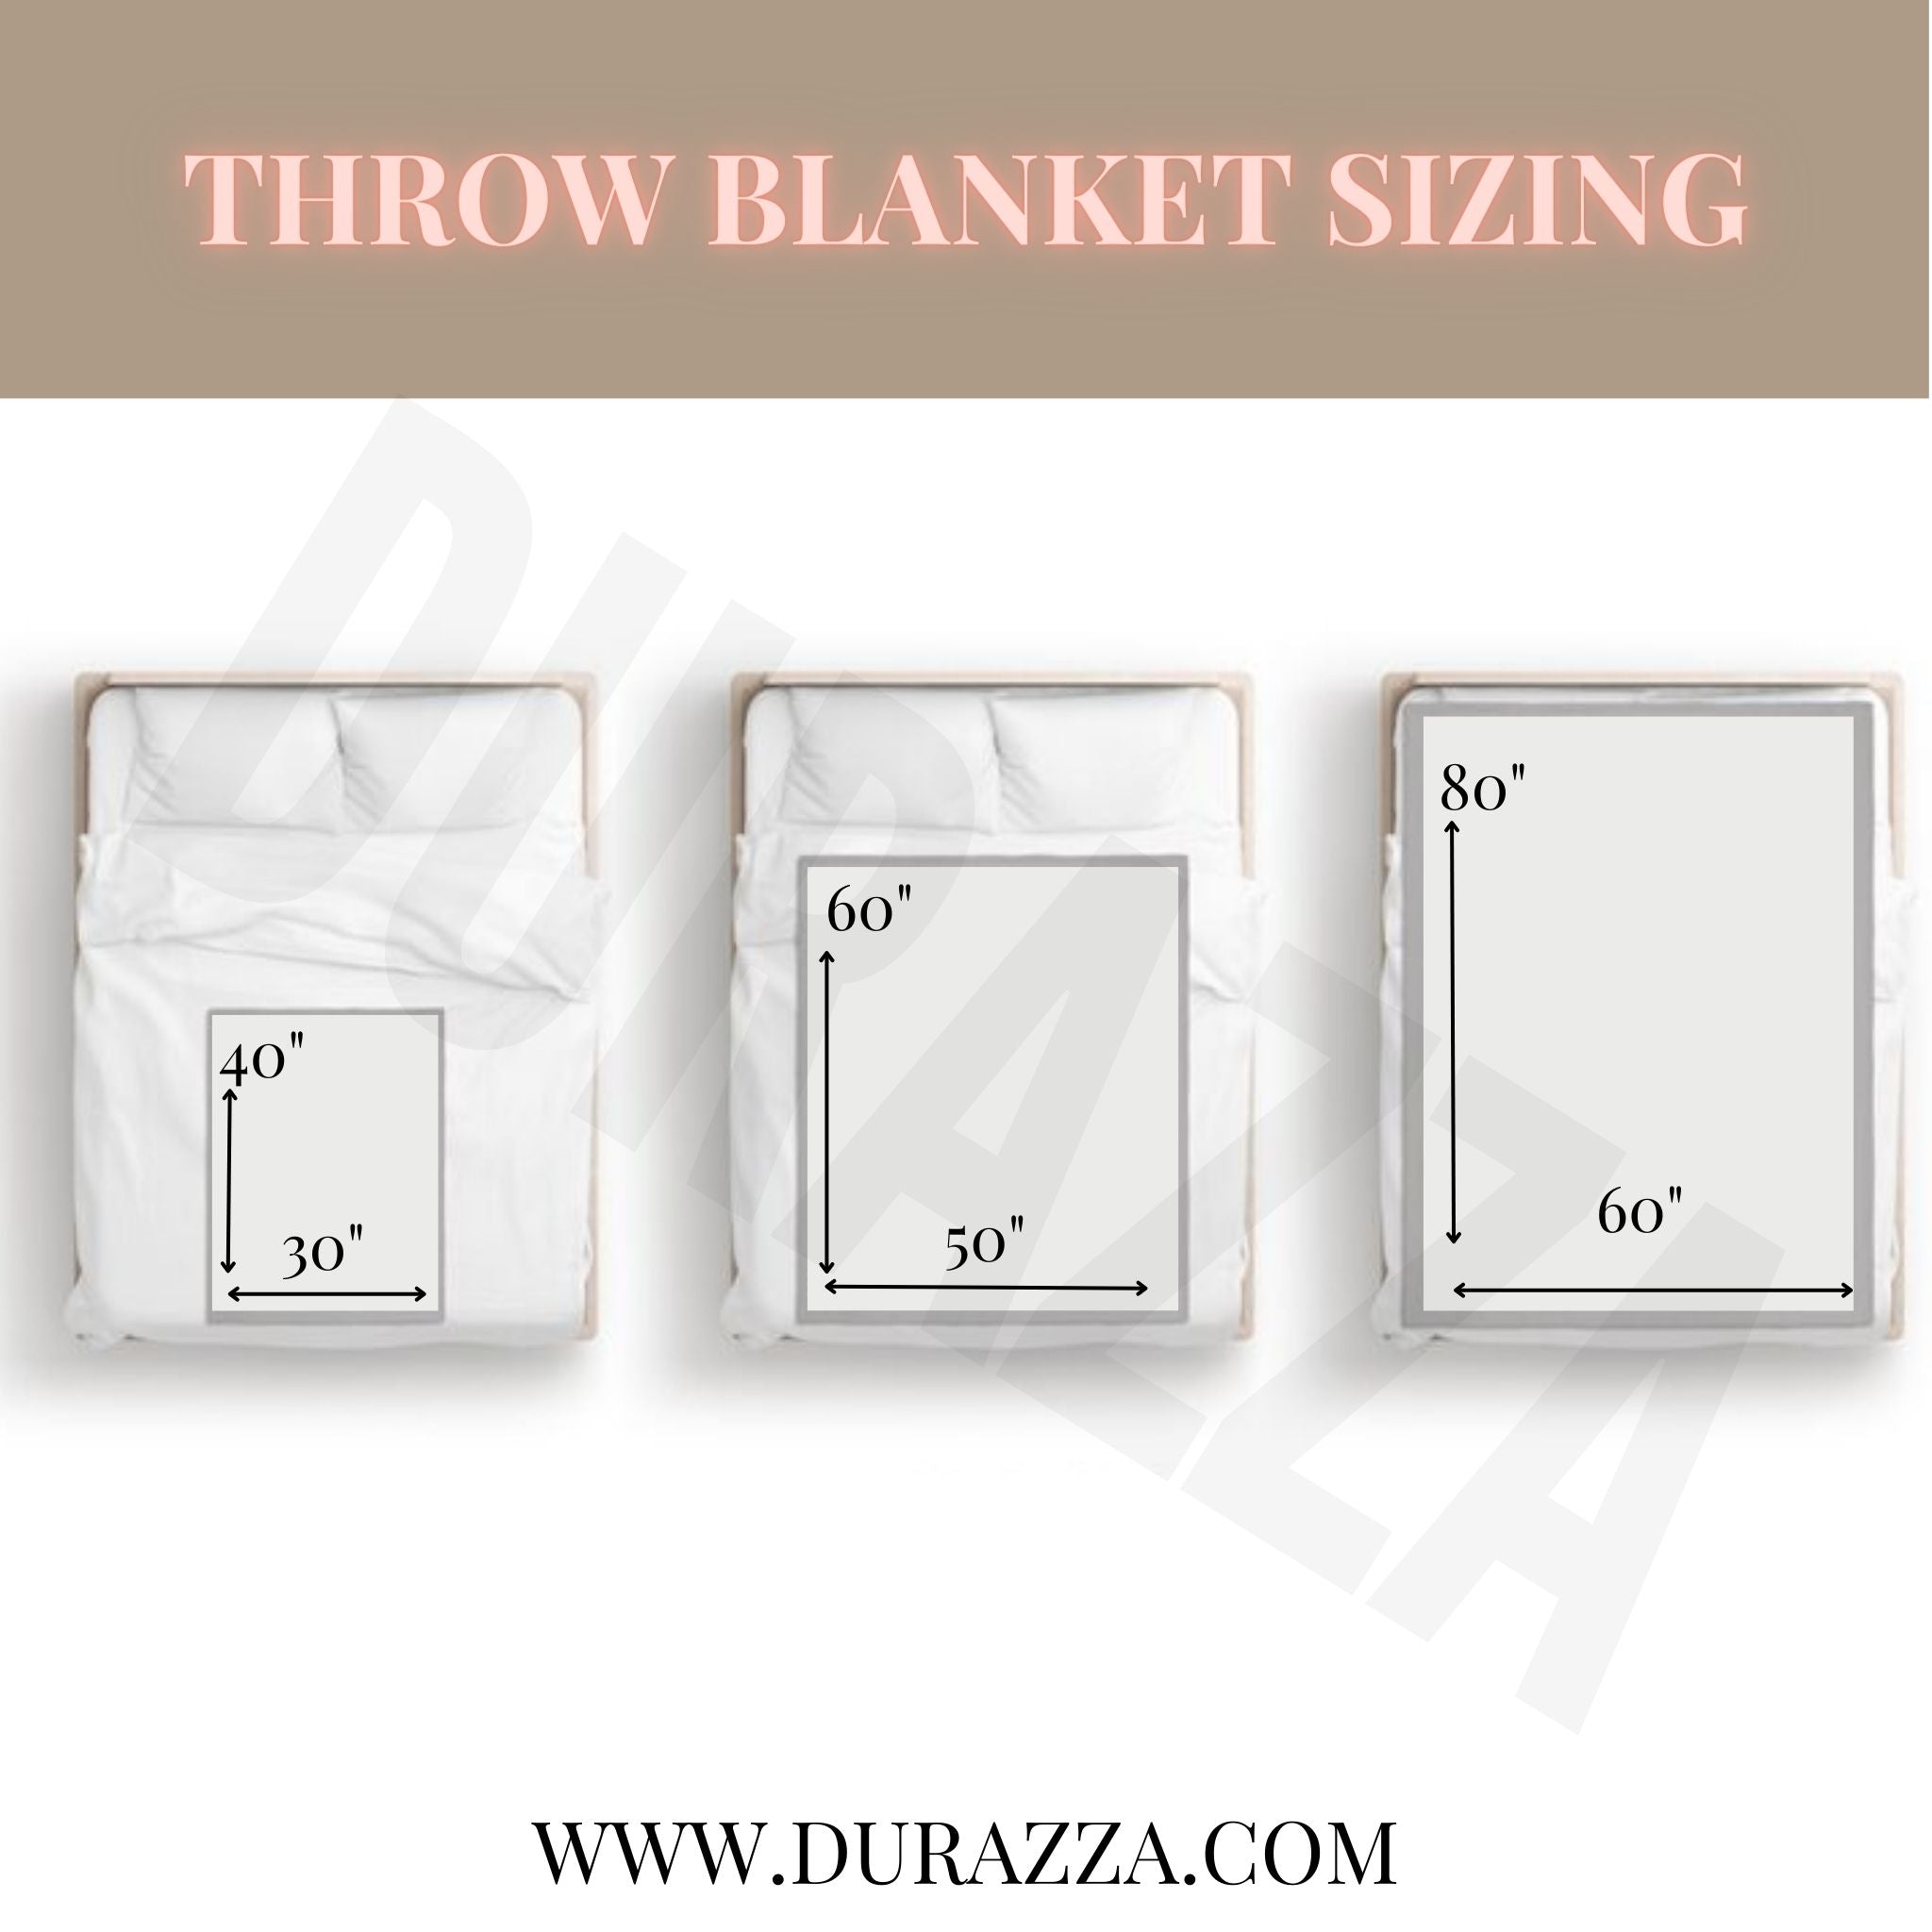 Teal Rose Black Throw Blanket, Minky or Sherpa Multi-Sized - Durazza